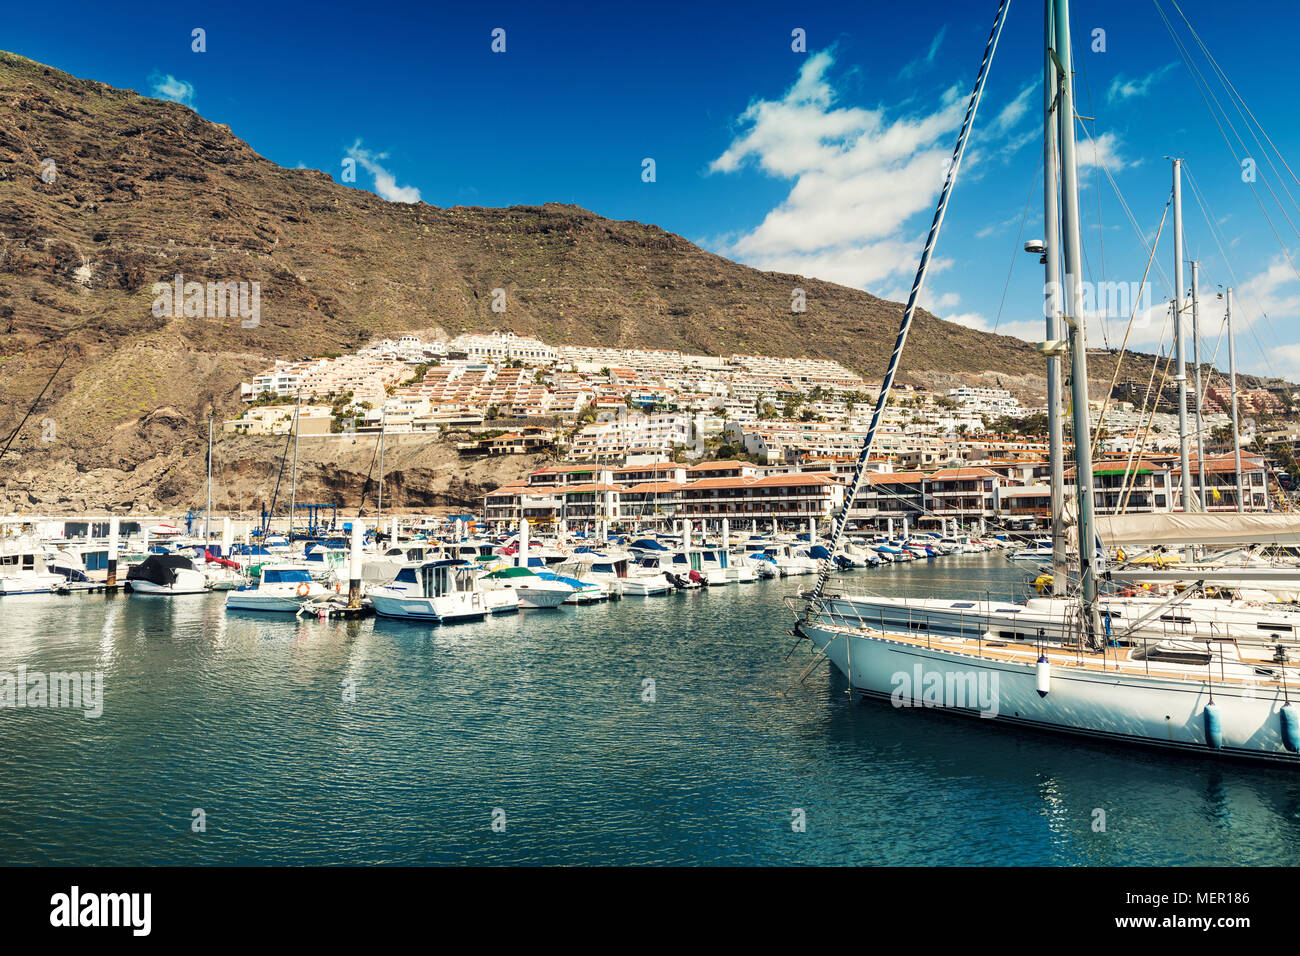 Port marina tenerife fotografías e imágenes de alta resolución - Alamy